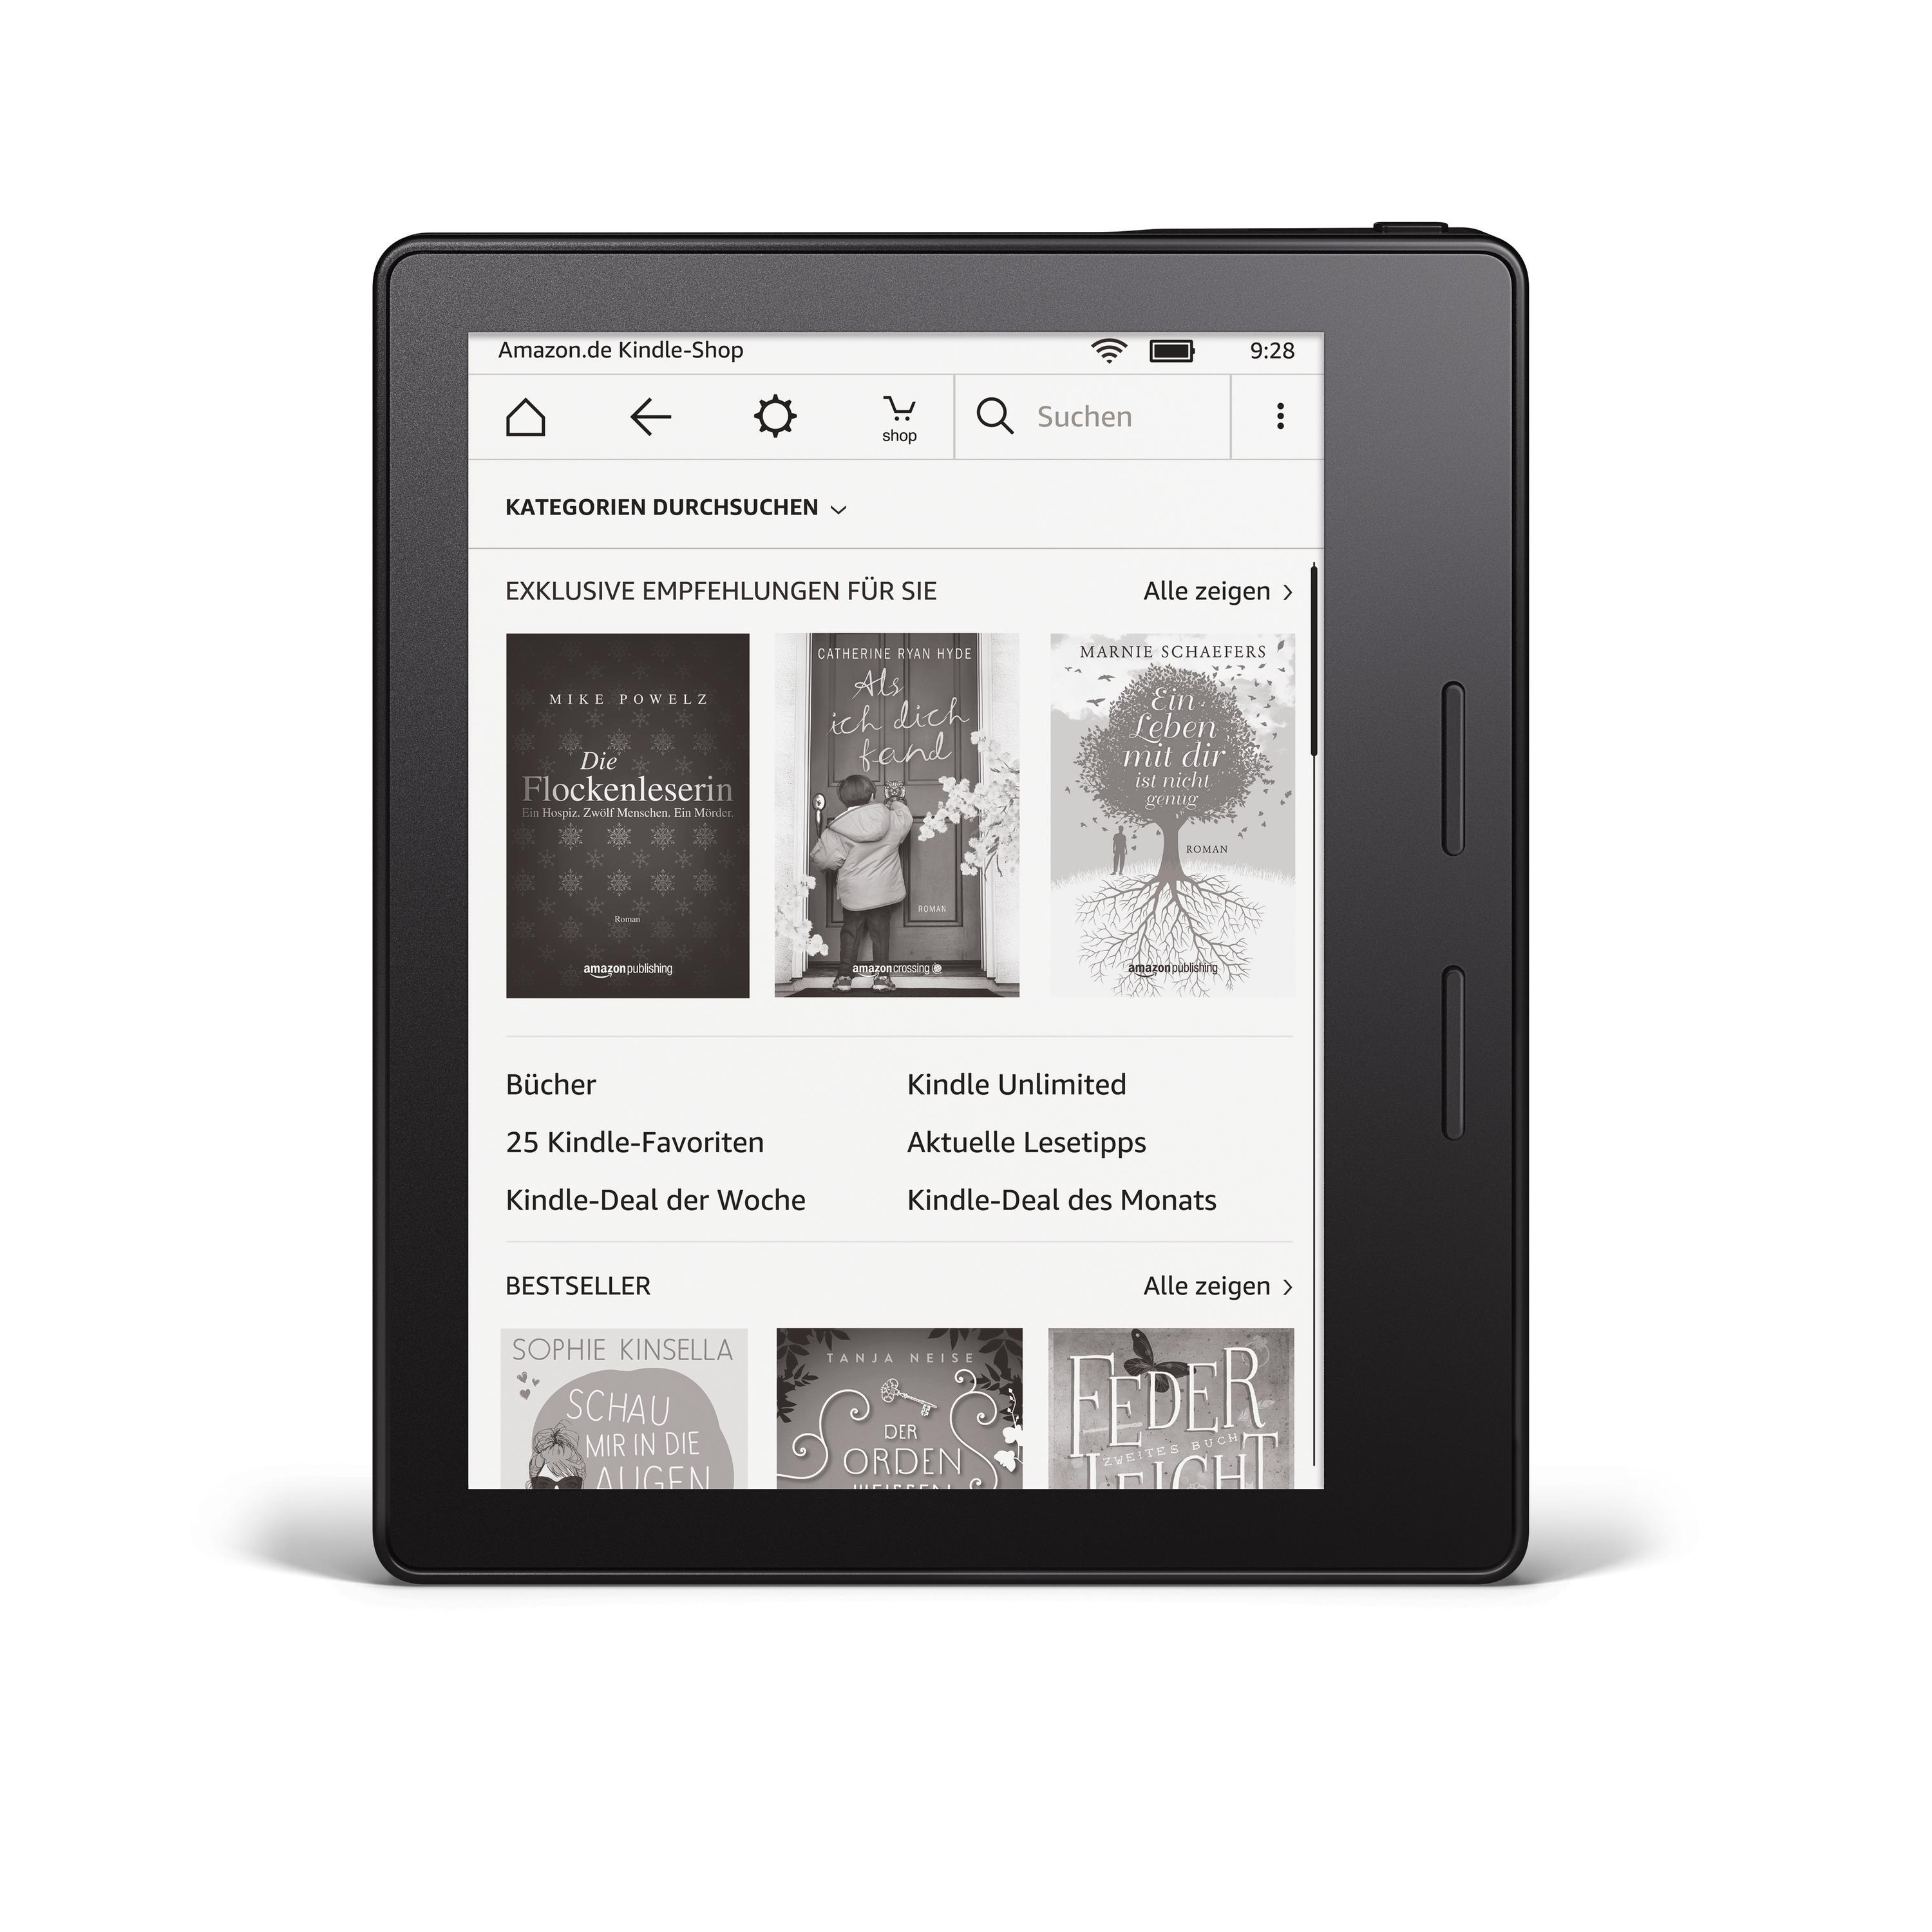 Amazon stellt neue KindleGeneration "Oasis" vor GMX.AT